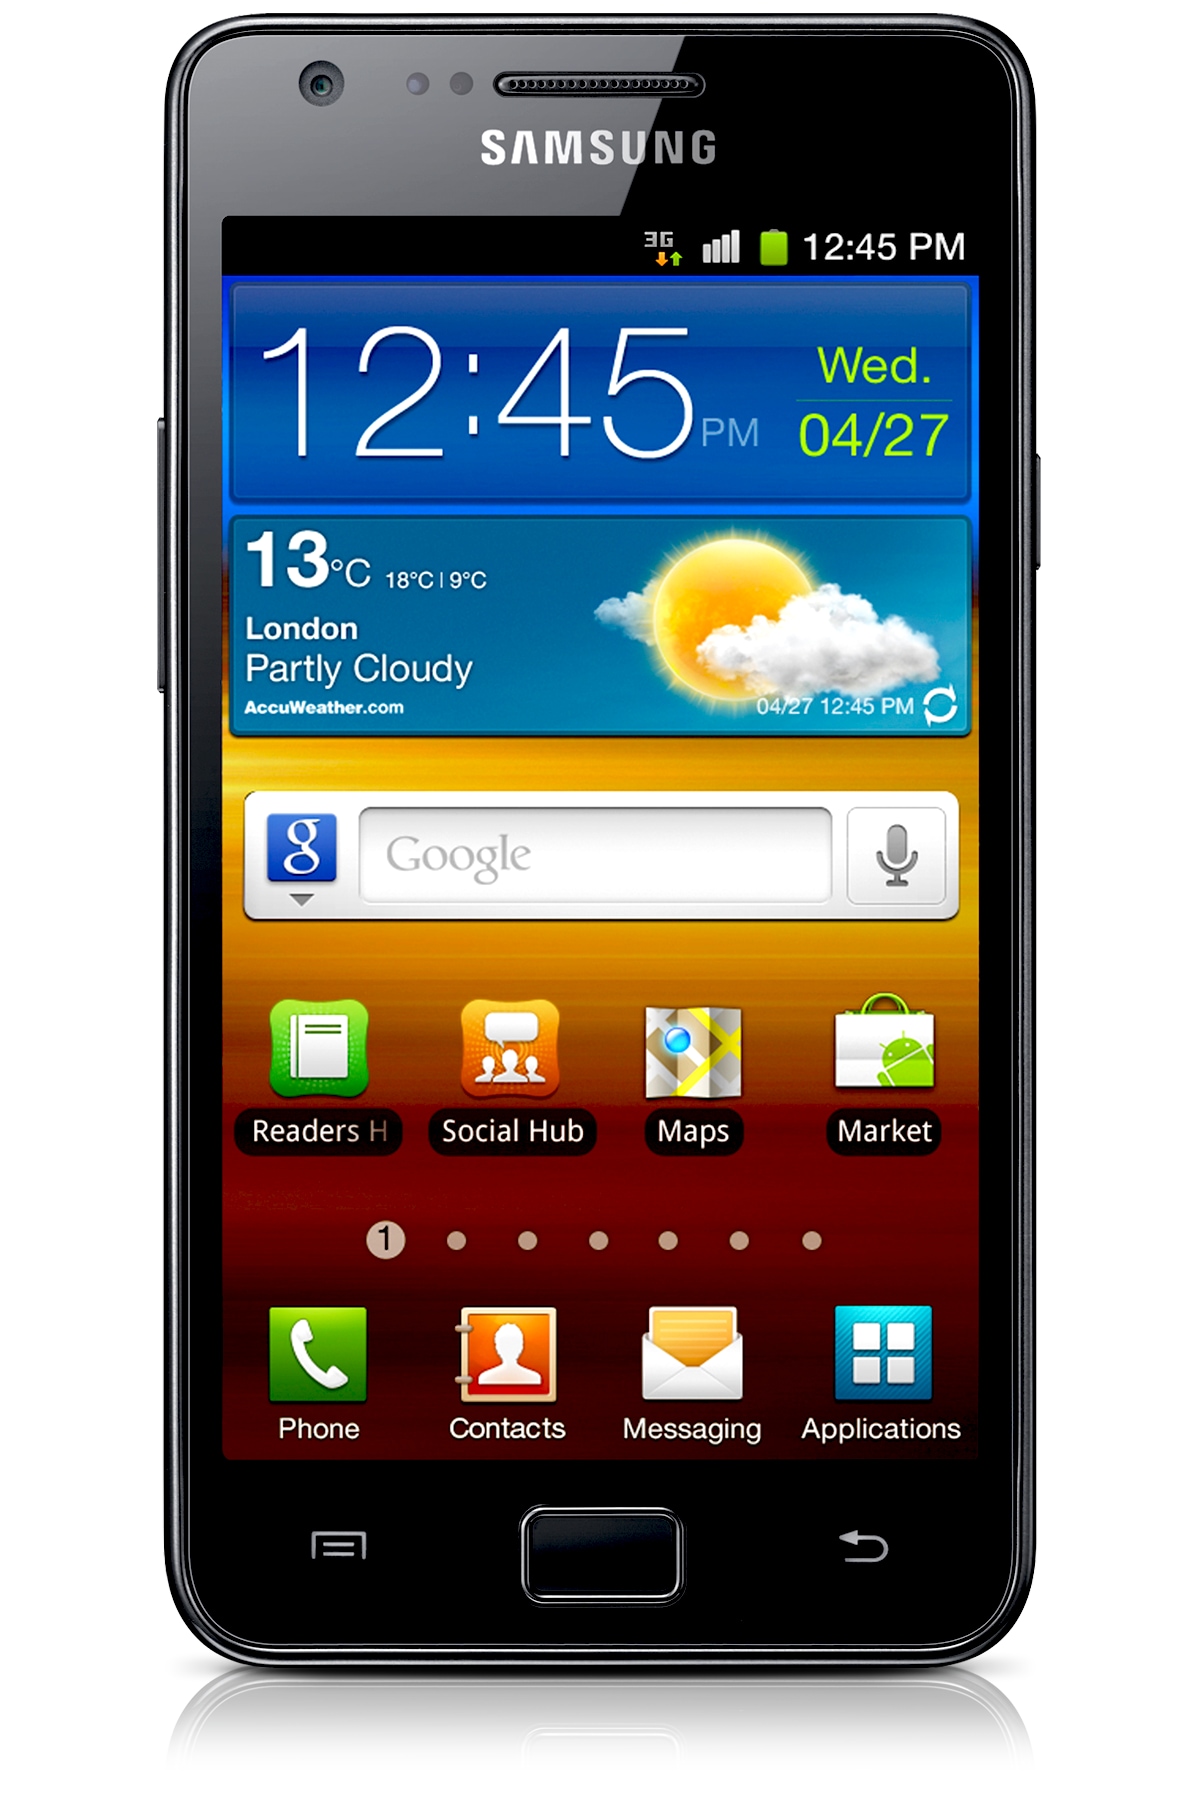 Samsung Galaxy S2 Smartphone 55” Display Features Black